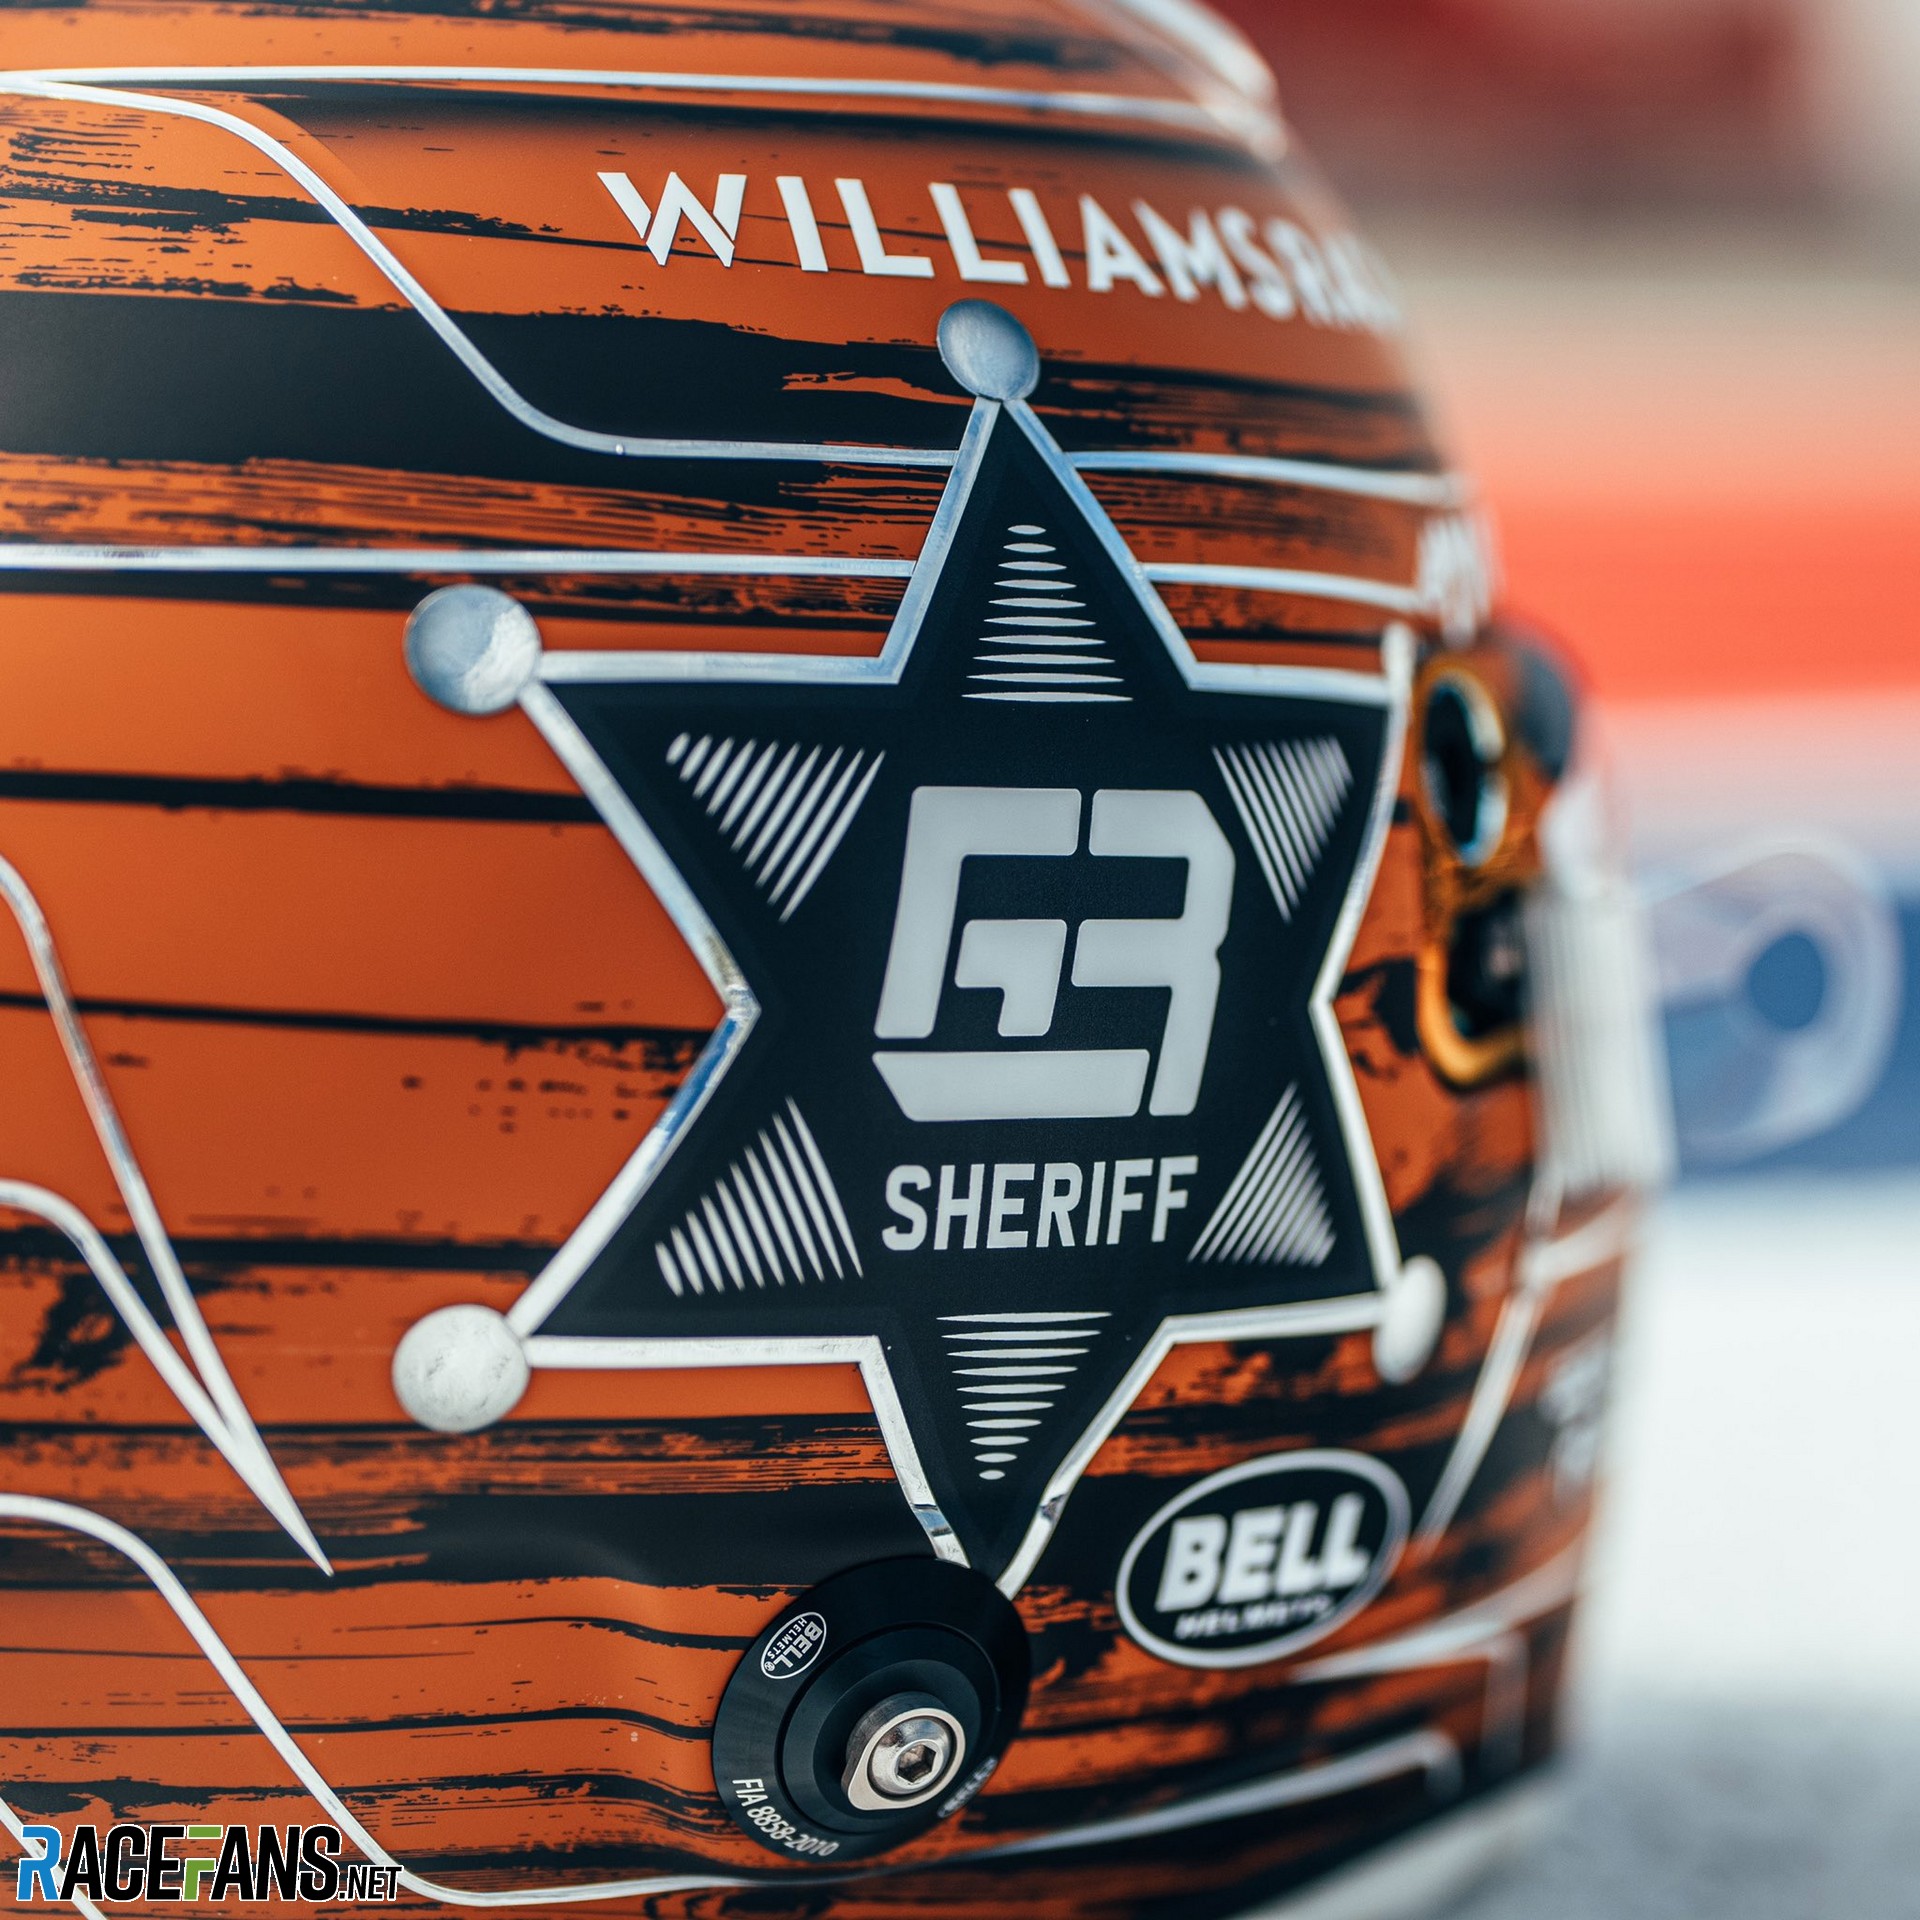 George Russell's 2021 United States Grand Prix helmet